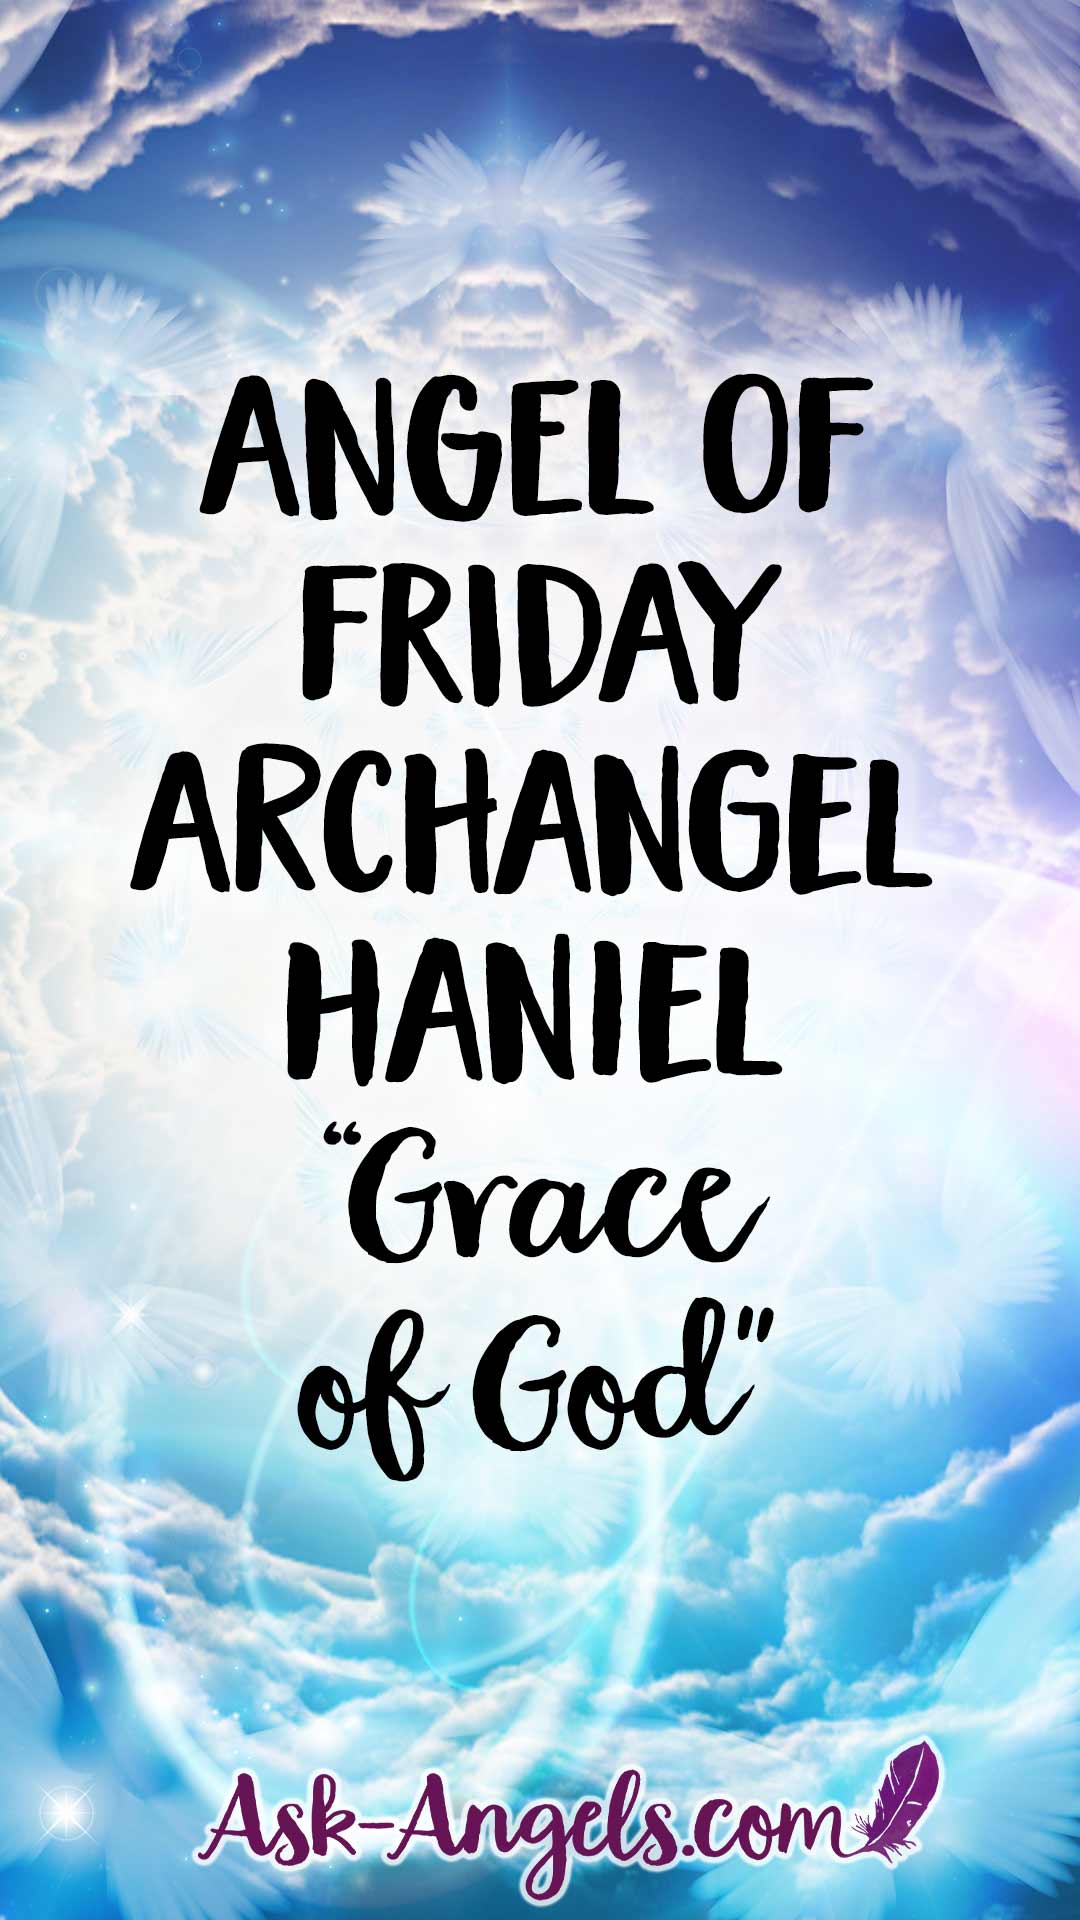 Archangel of Friday: Archangel Anael or Archangel Haniel- Haniel means Grace of God